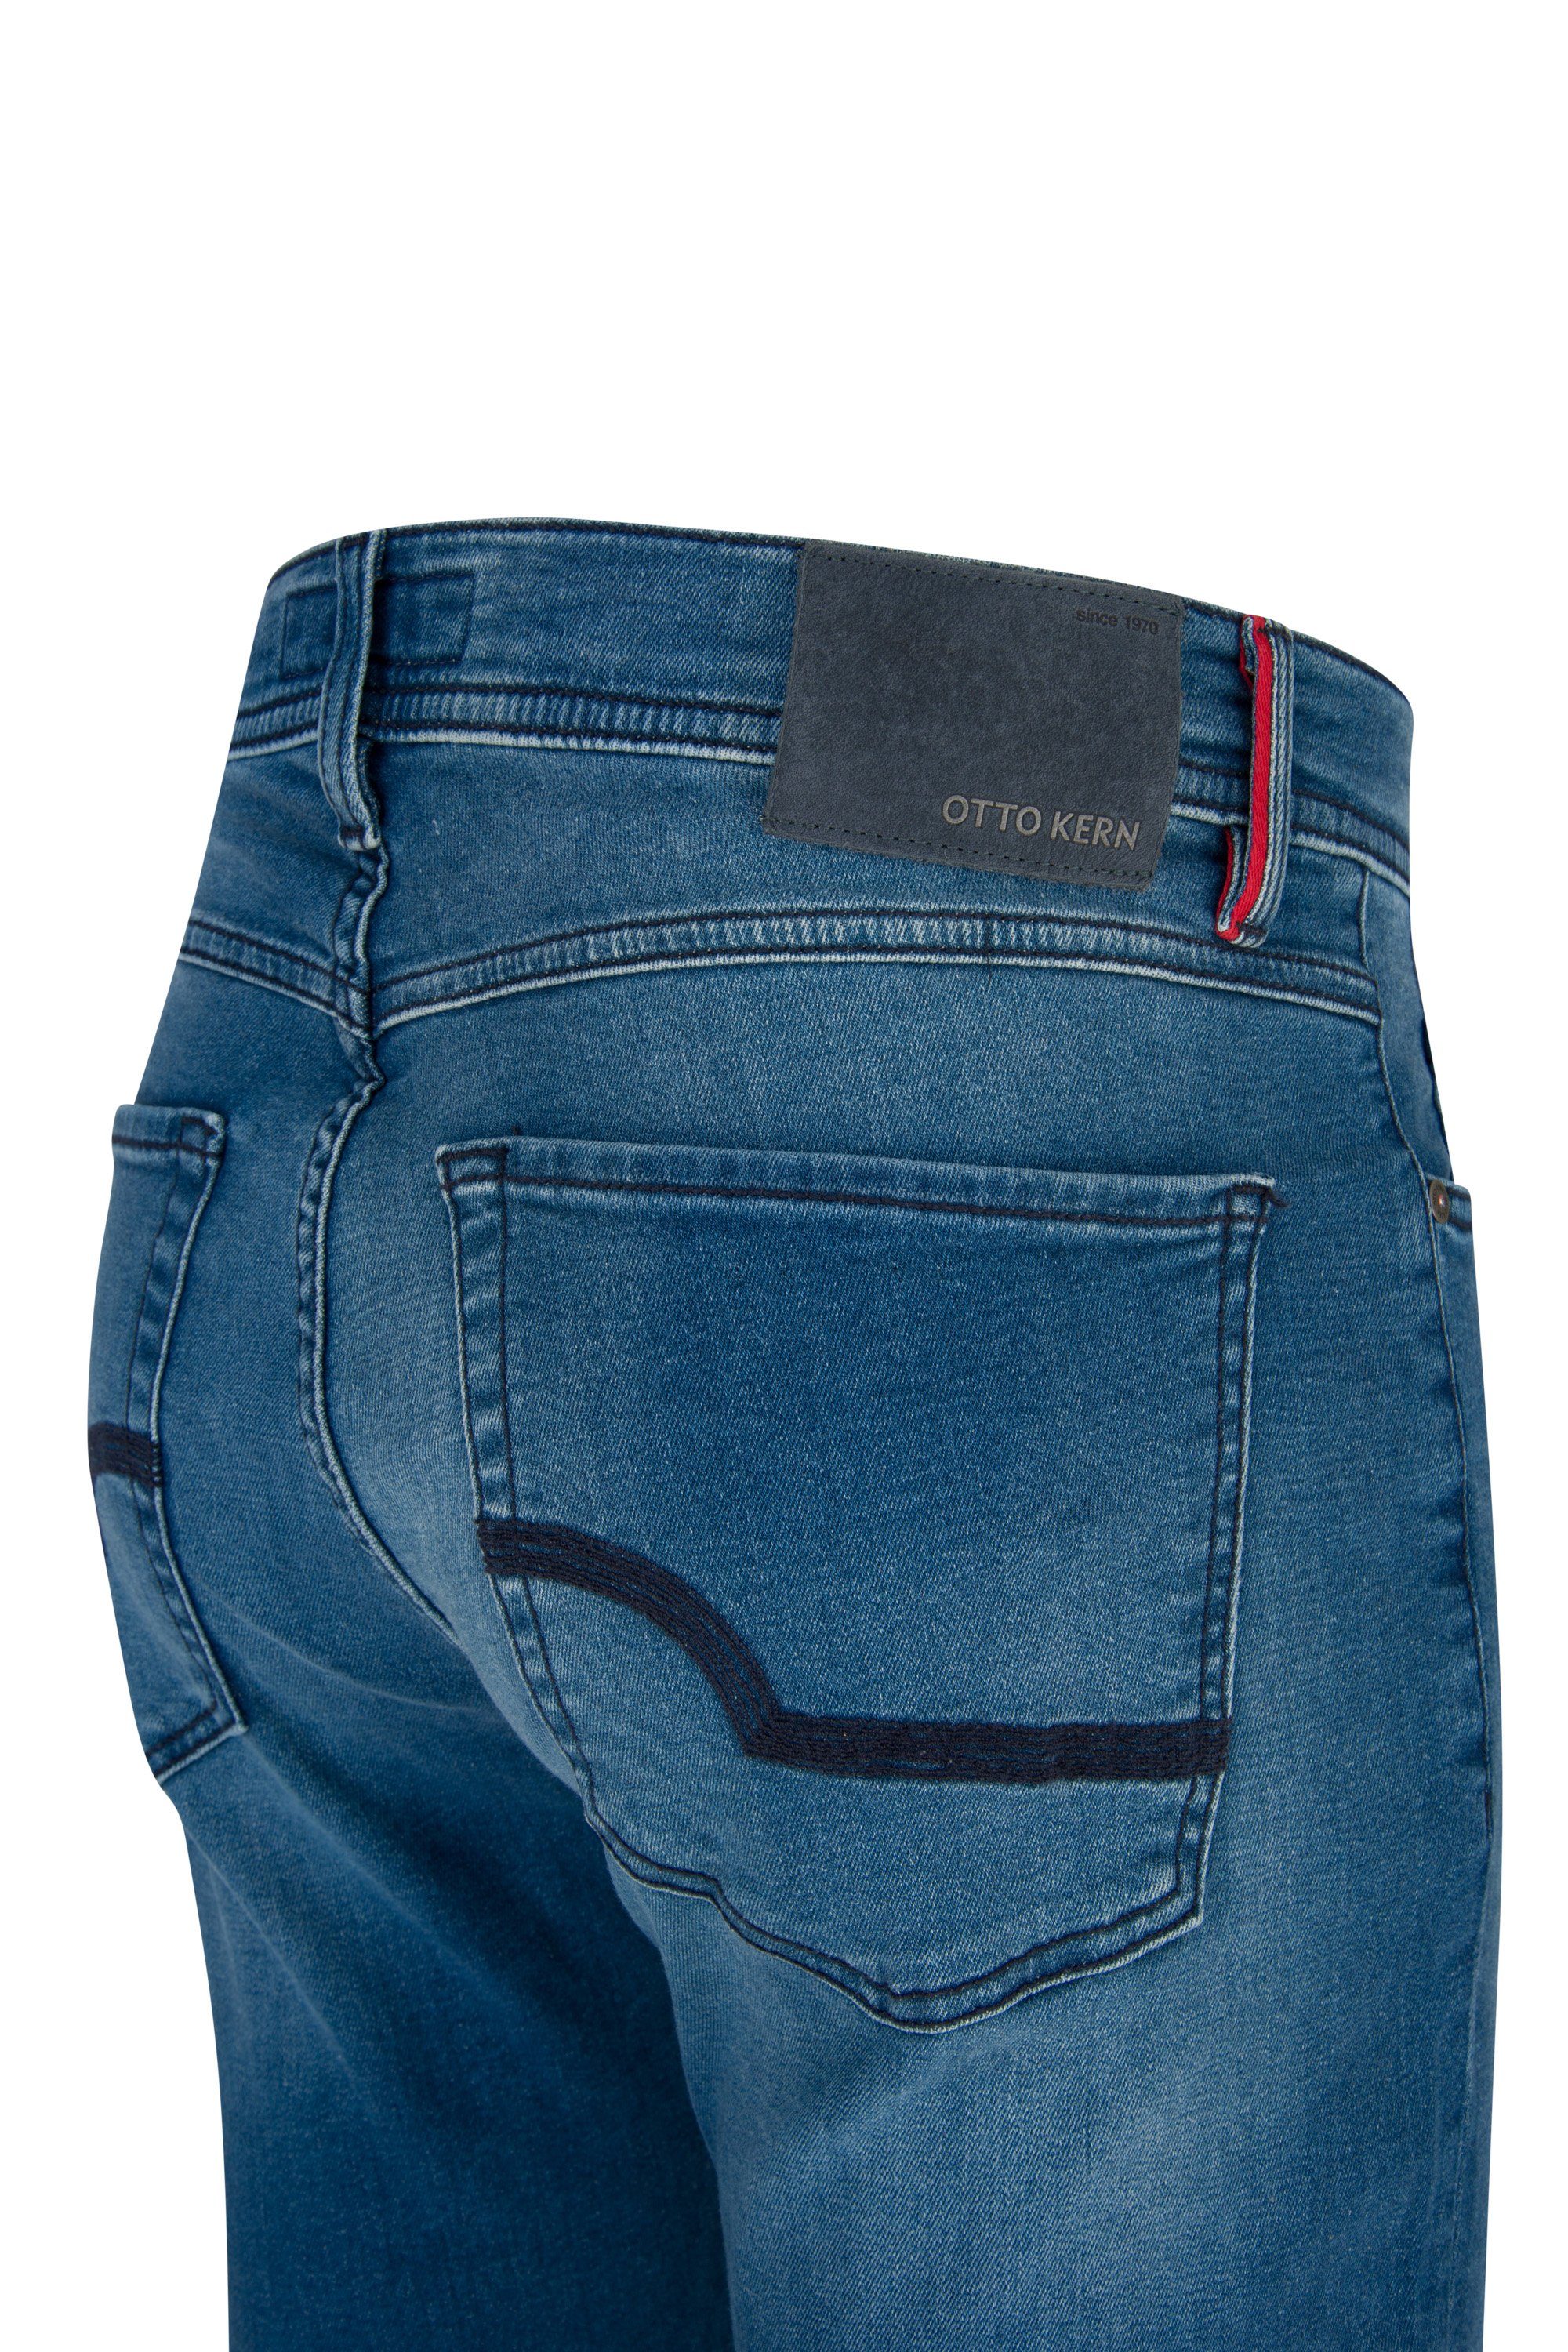 wash mid 5-Pocket-Jeans Pure blue - JOHN Kern 67041 OTTO Dynamic KERN Stret used 6816.6824